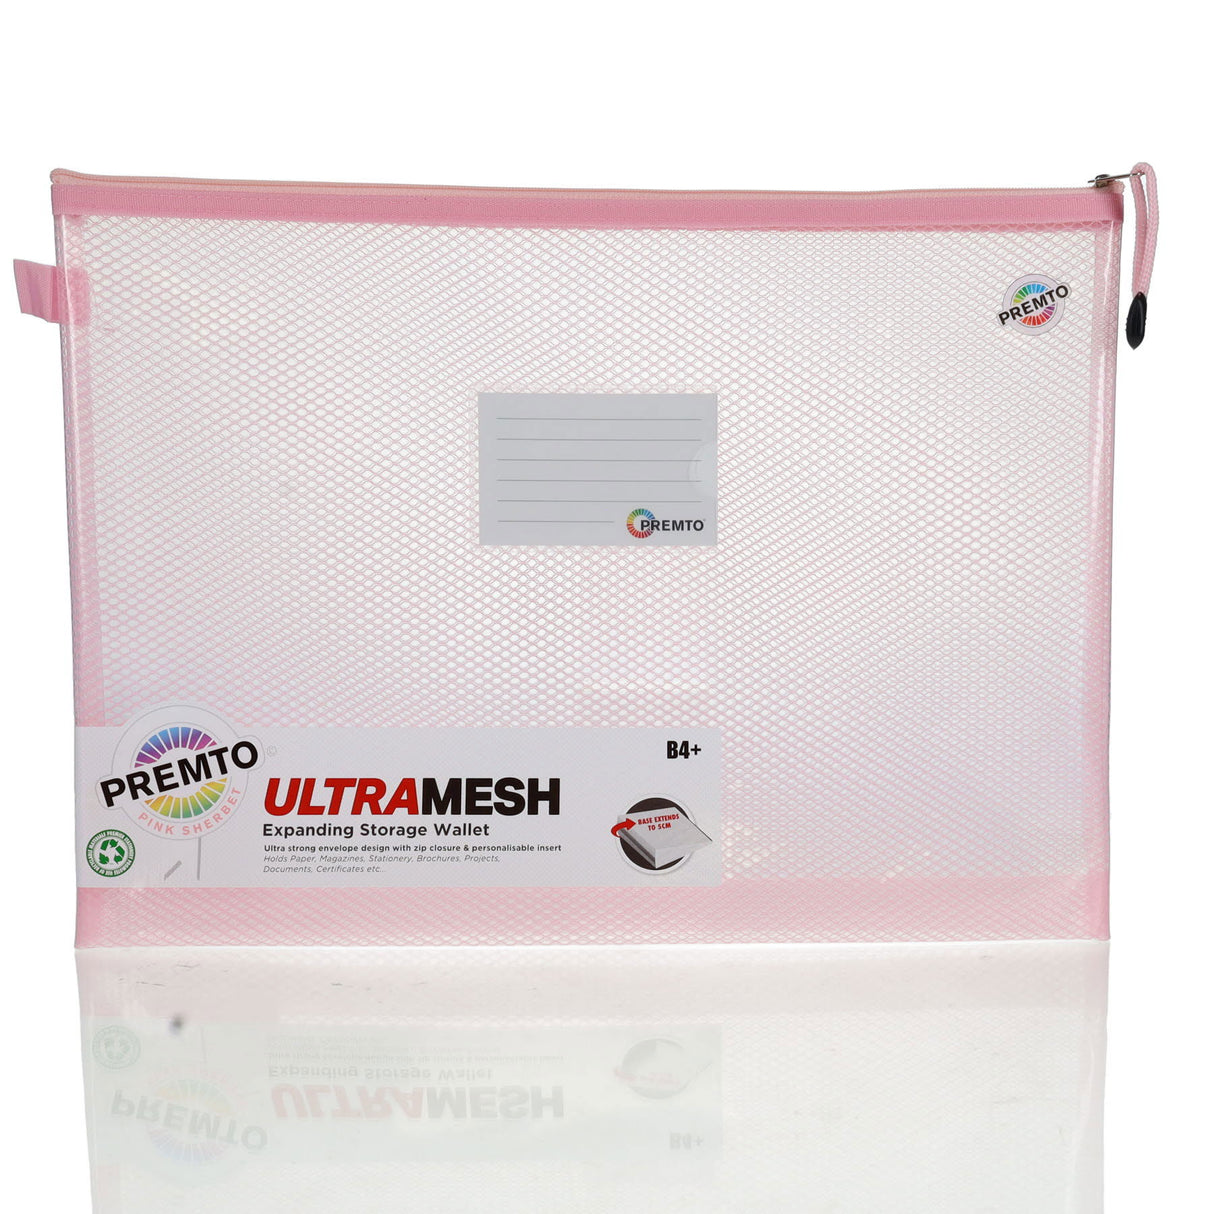 Premto Pastel B4+ Ultramesh Expanding Wallet - Pink Sherbet